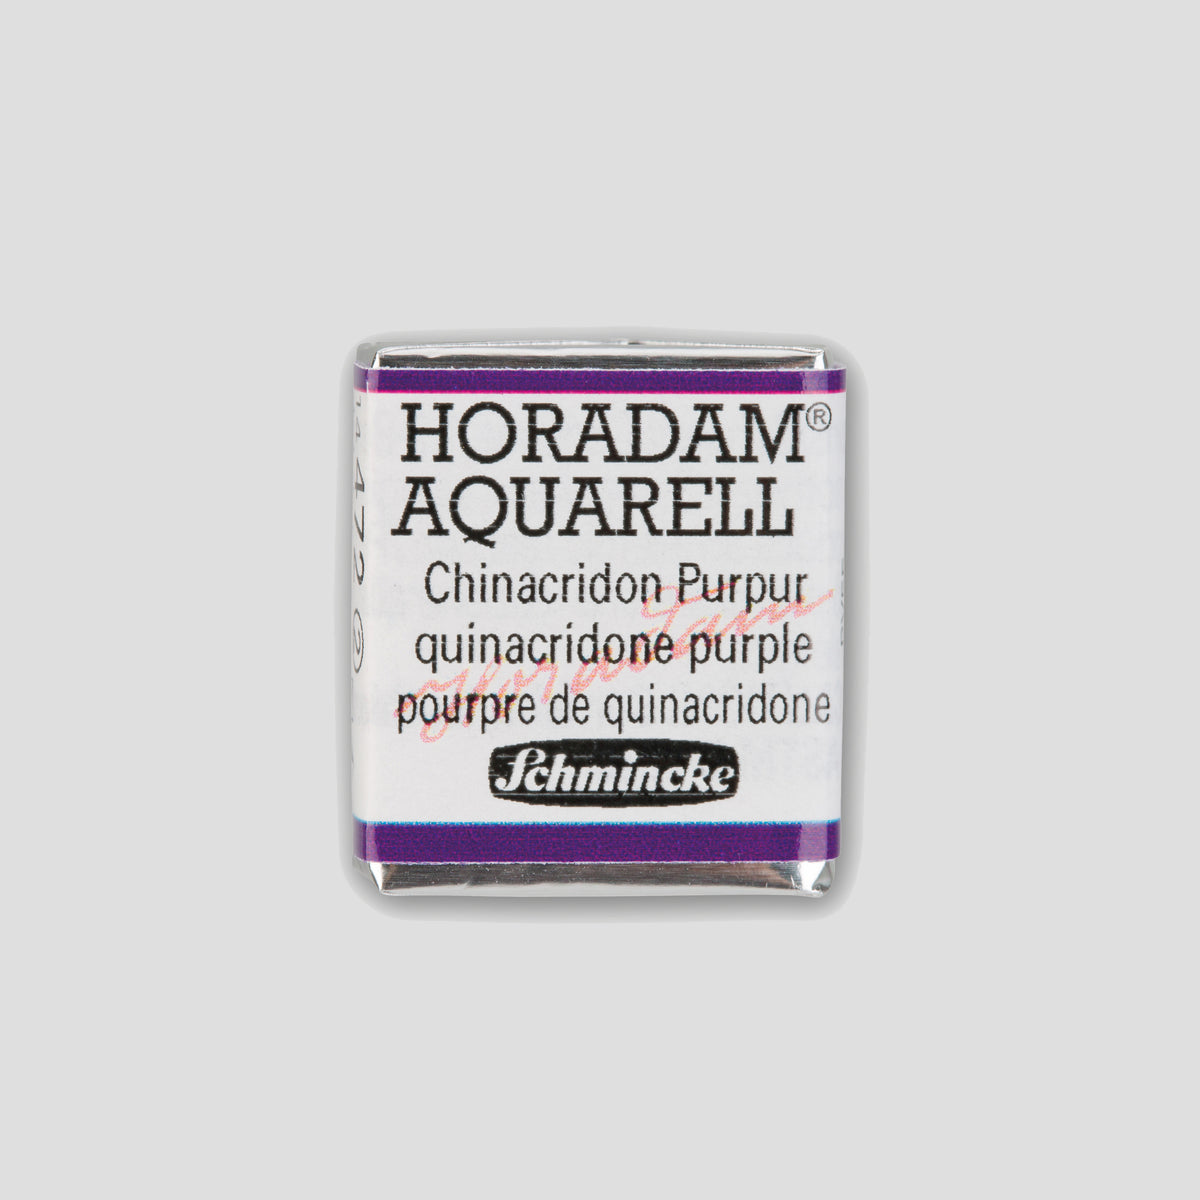 Schmincke Horadam® Half pan 472 Quinacridone purple 2